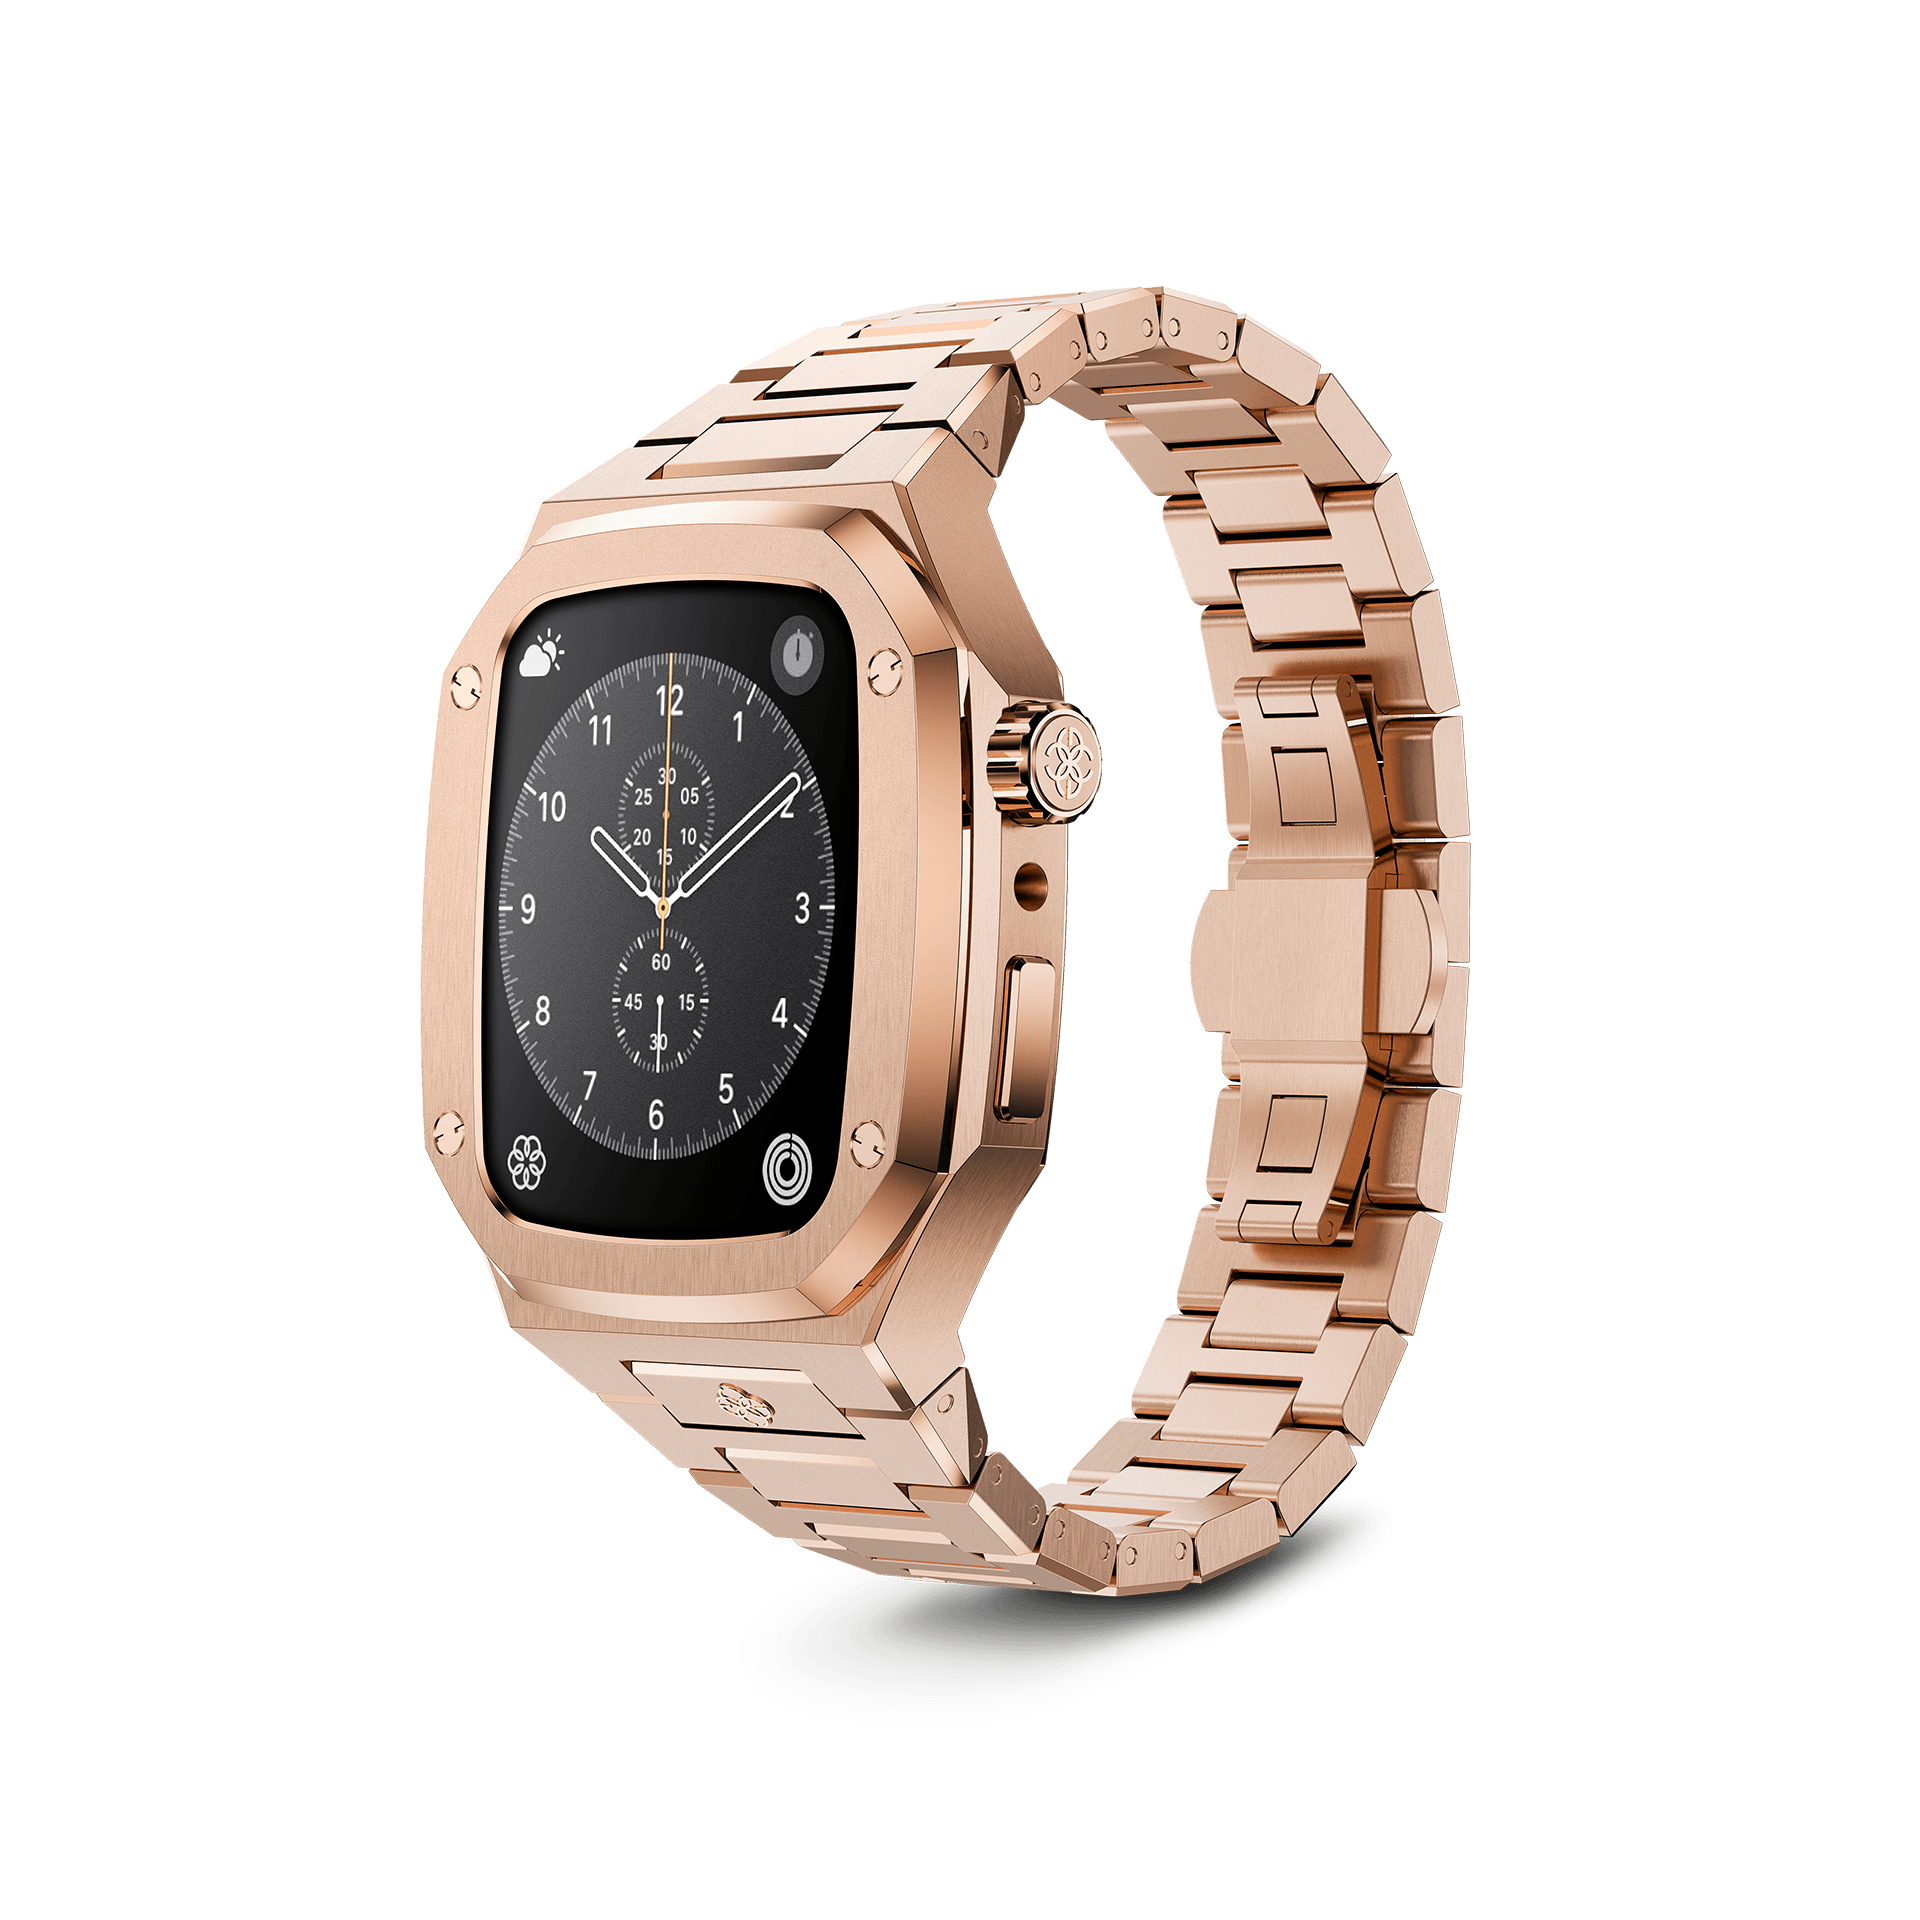 Luxury Apple Watch Cases   Golden Concept™ – GOLDEN CONCEPT